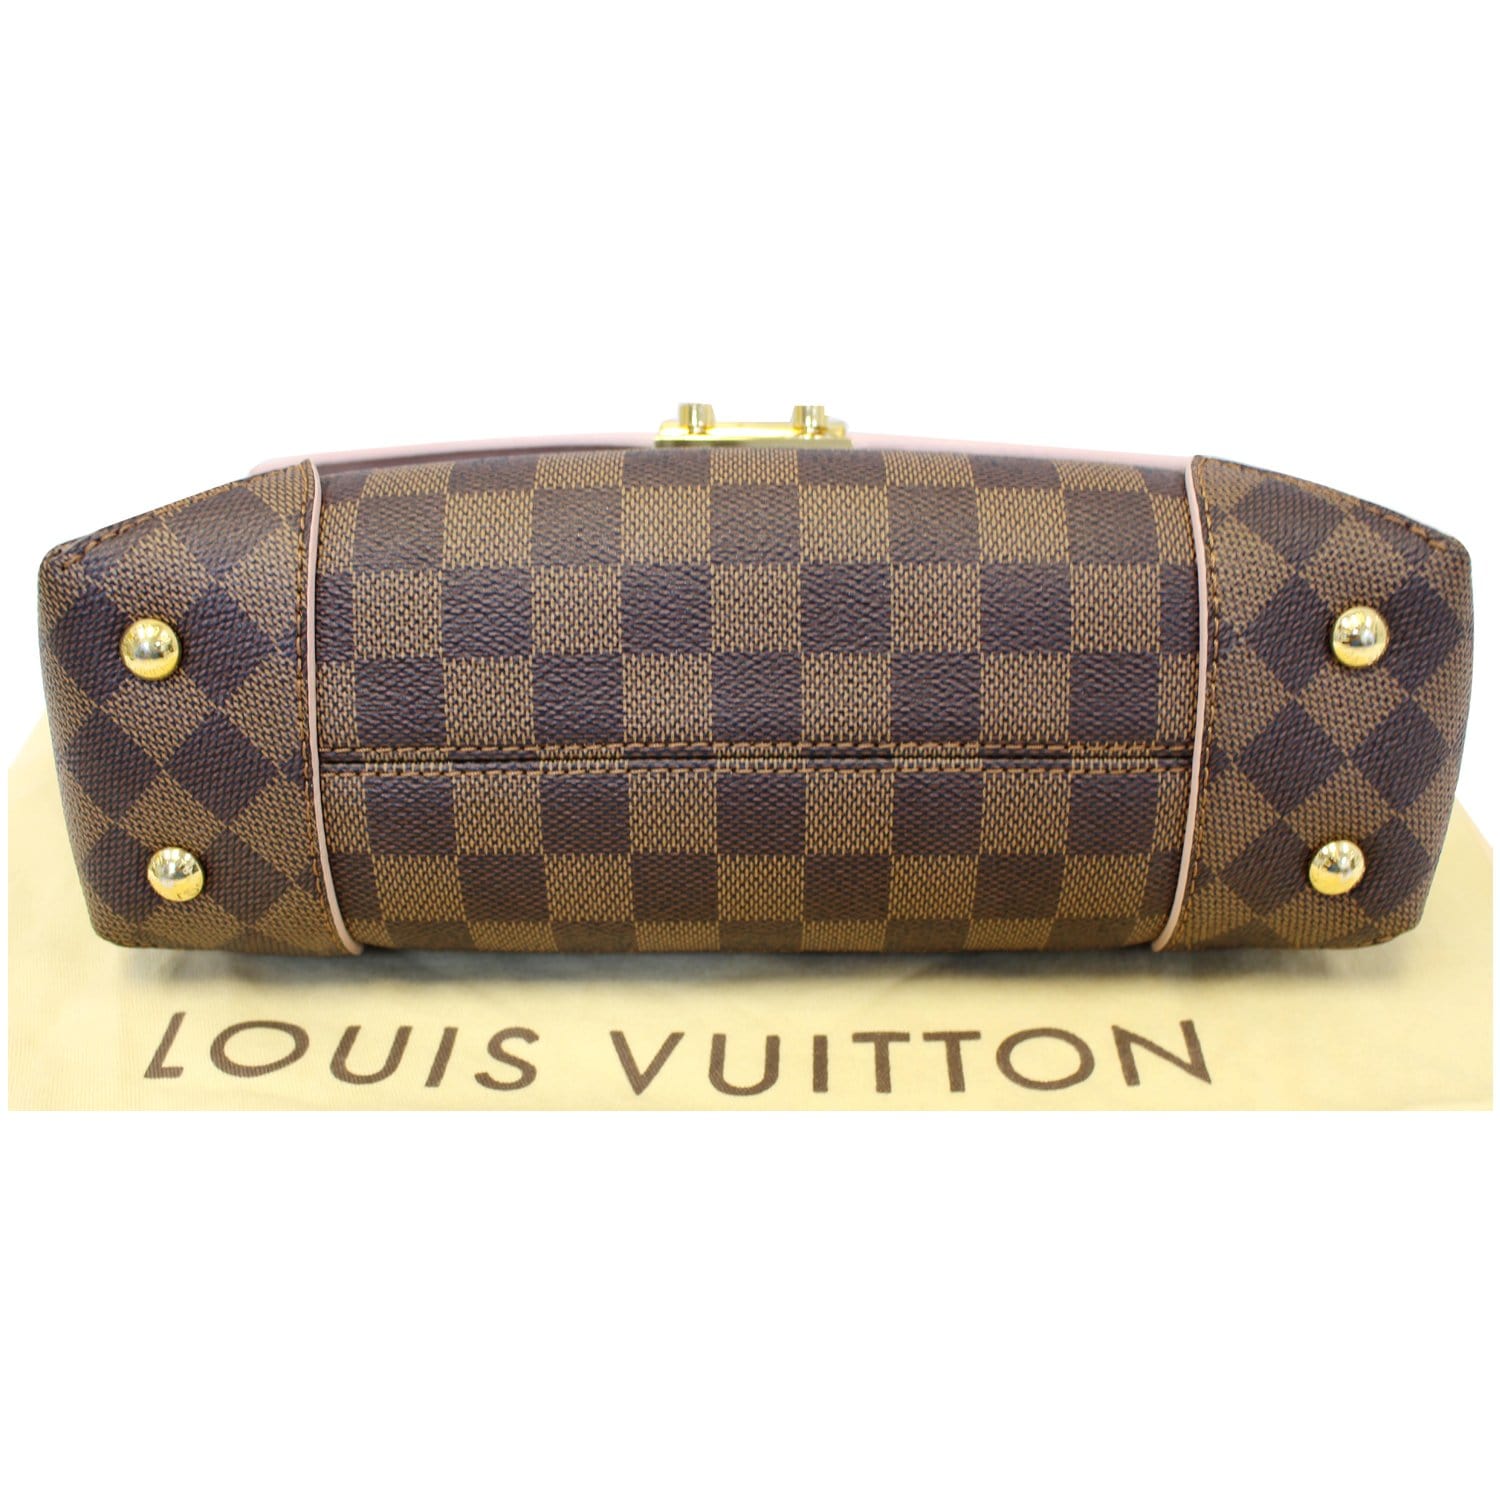 Sold Louis Vuitton Damier Caissa Clutch